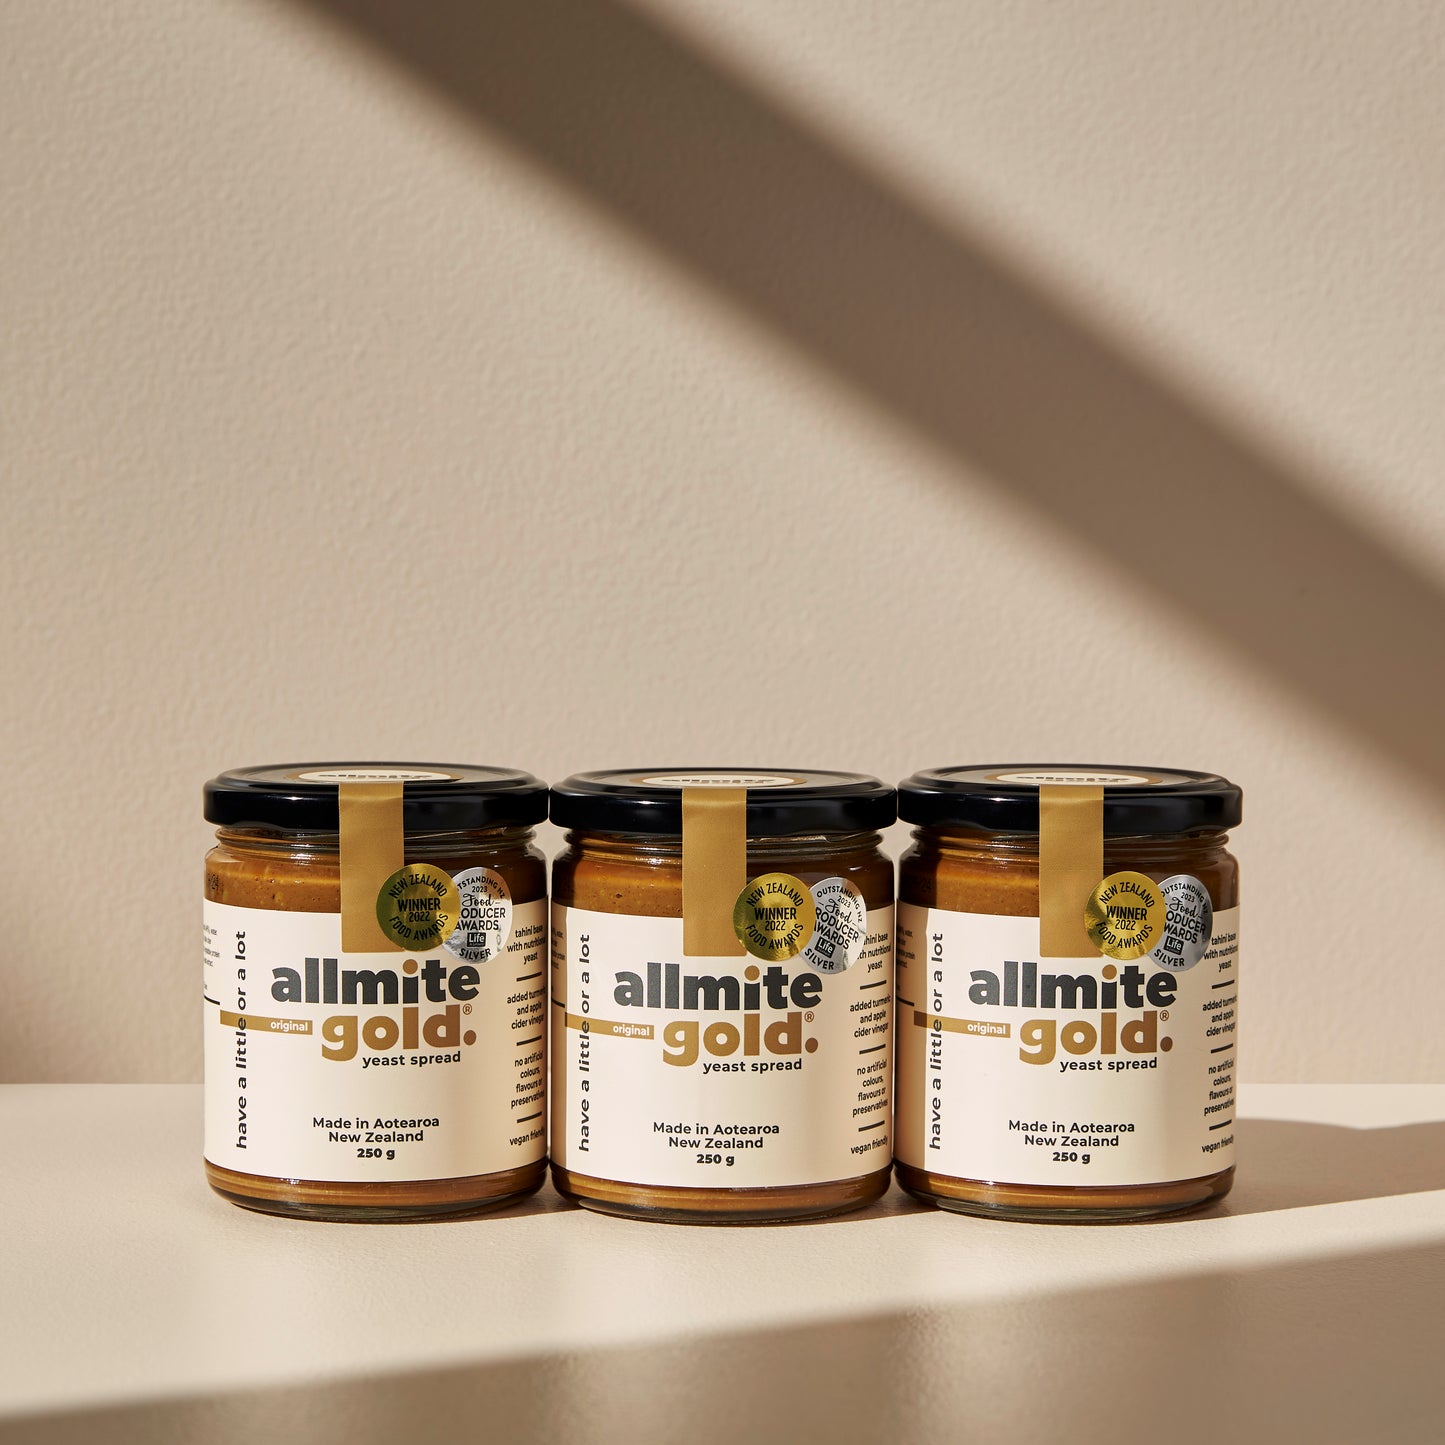 allmite gold yeast spread